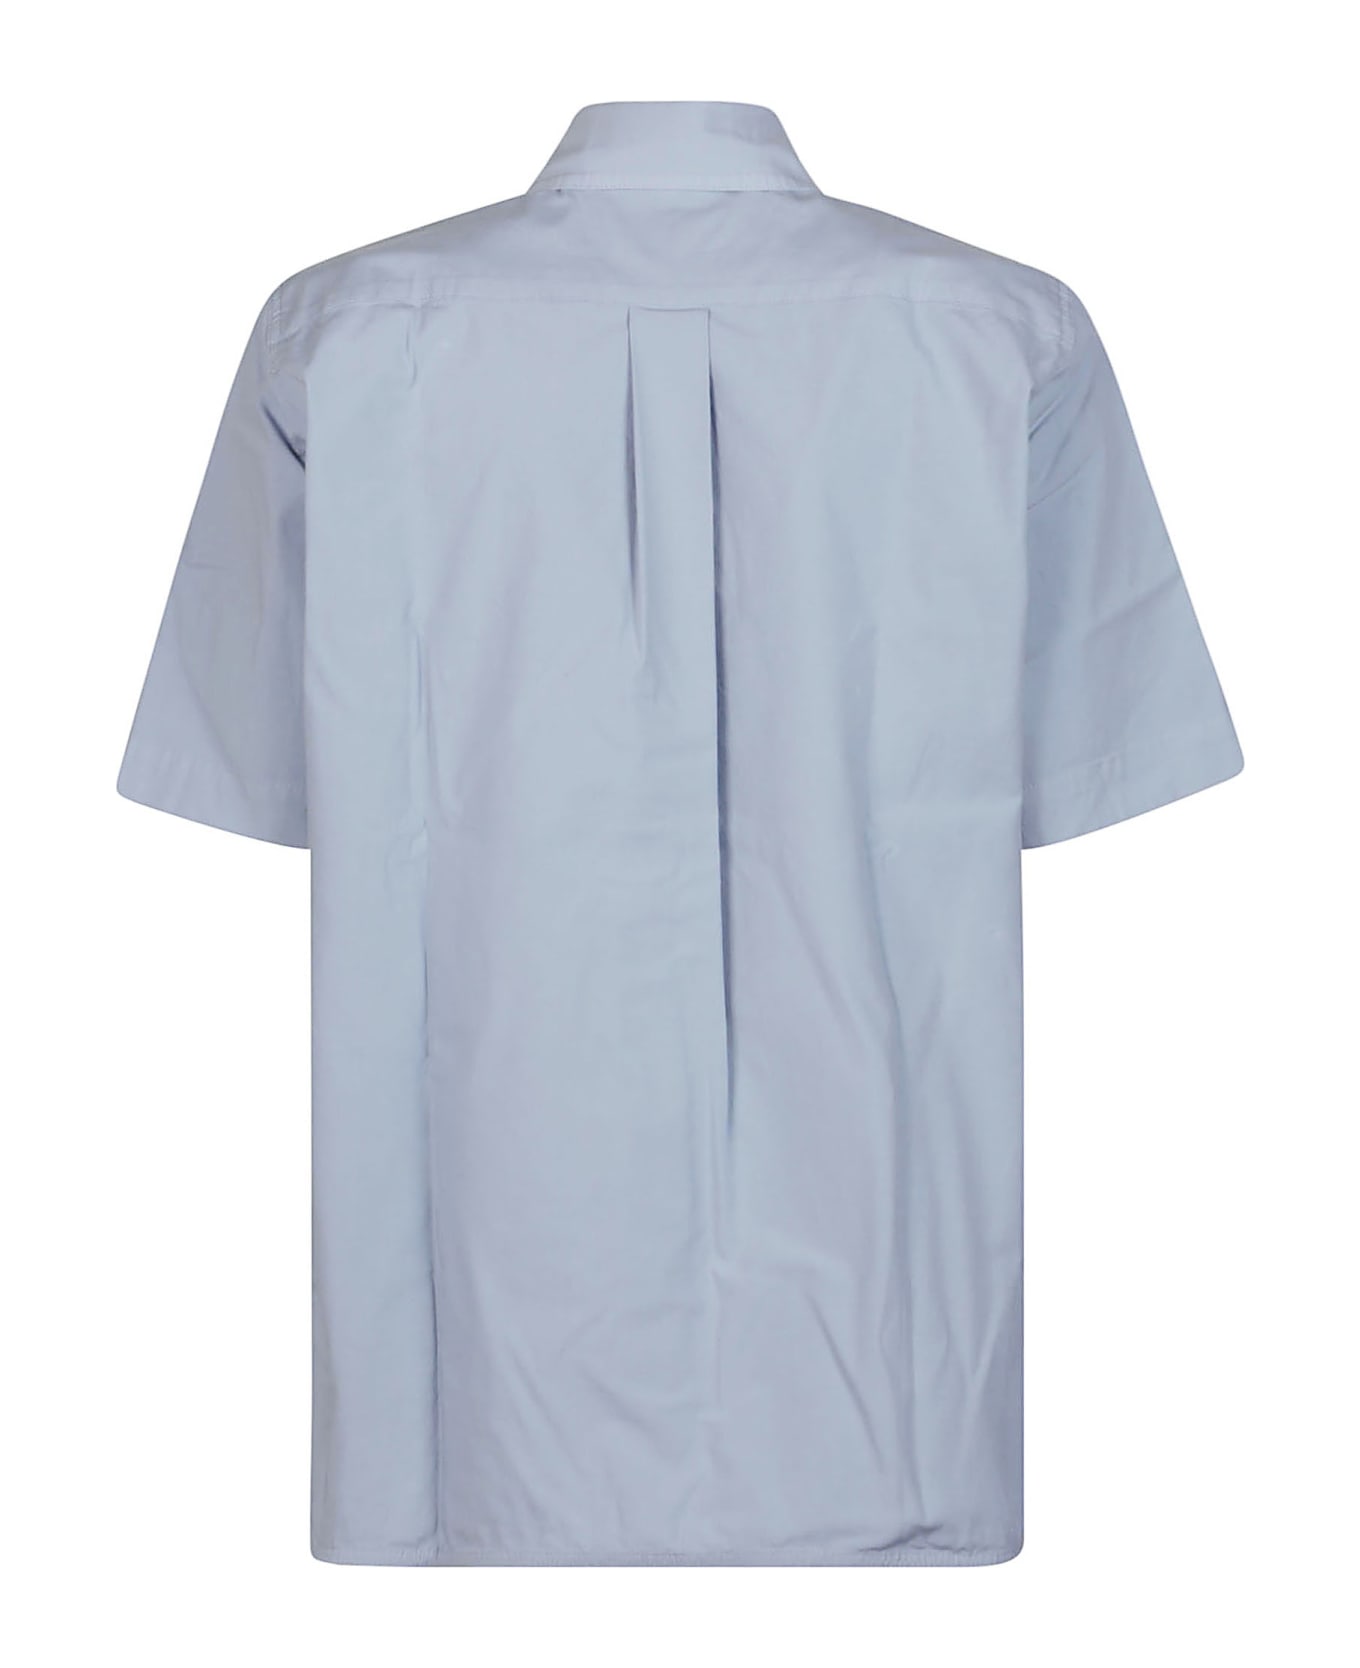 Max Mara Adunco Short Sleeve Shirt - Azzurro